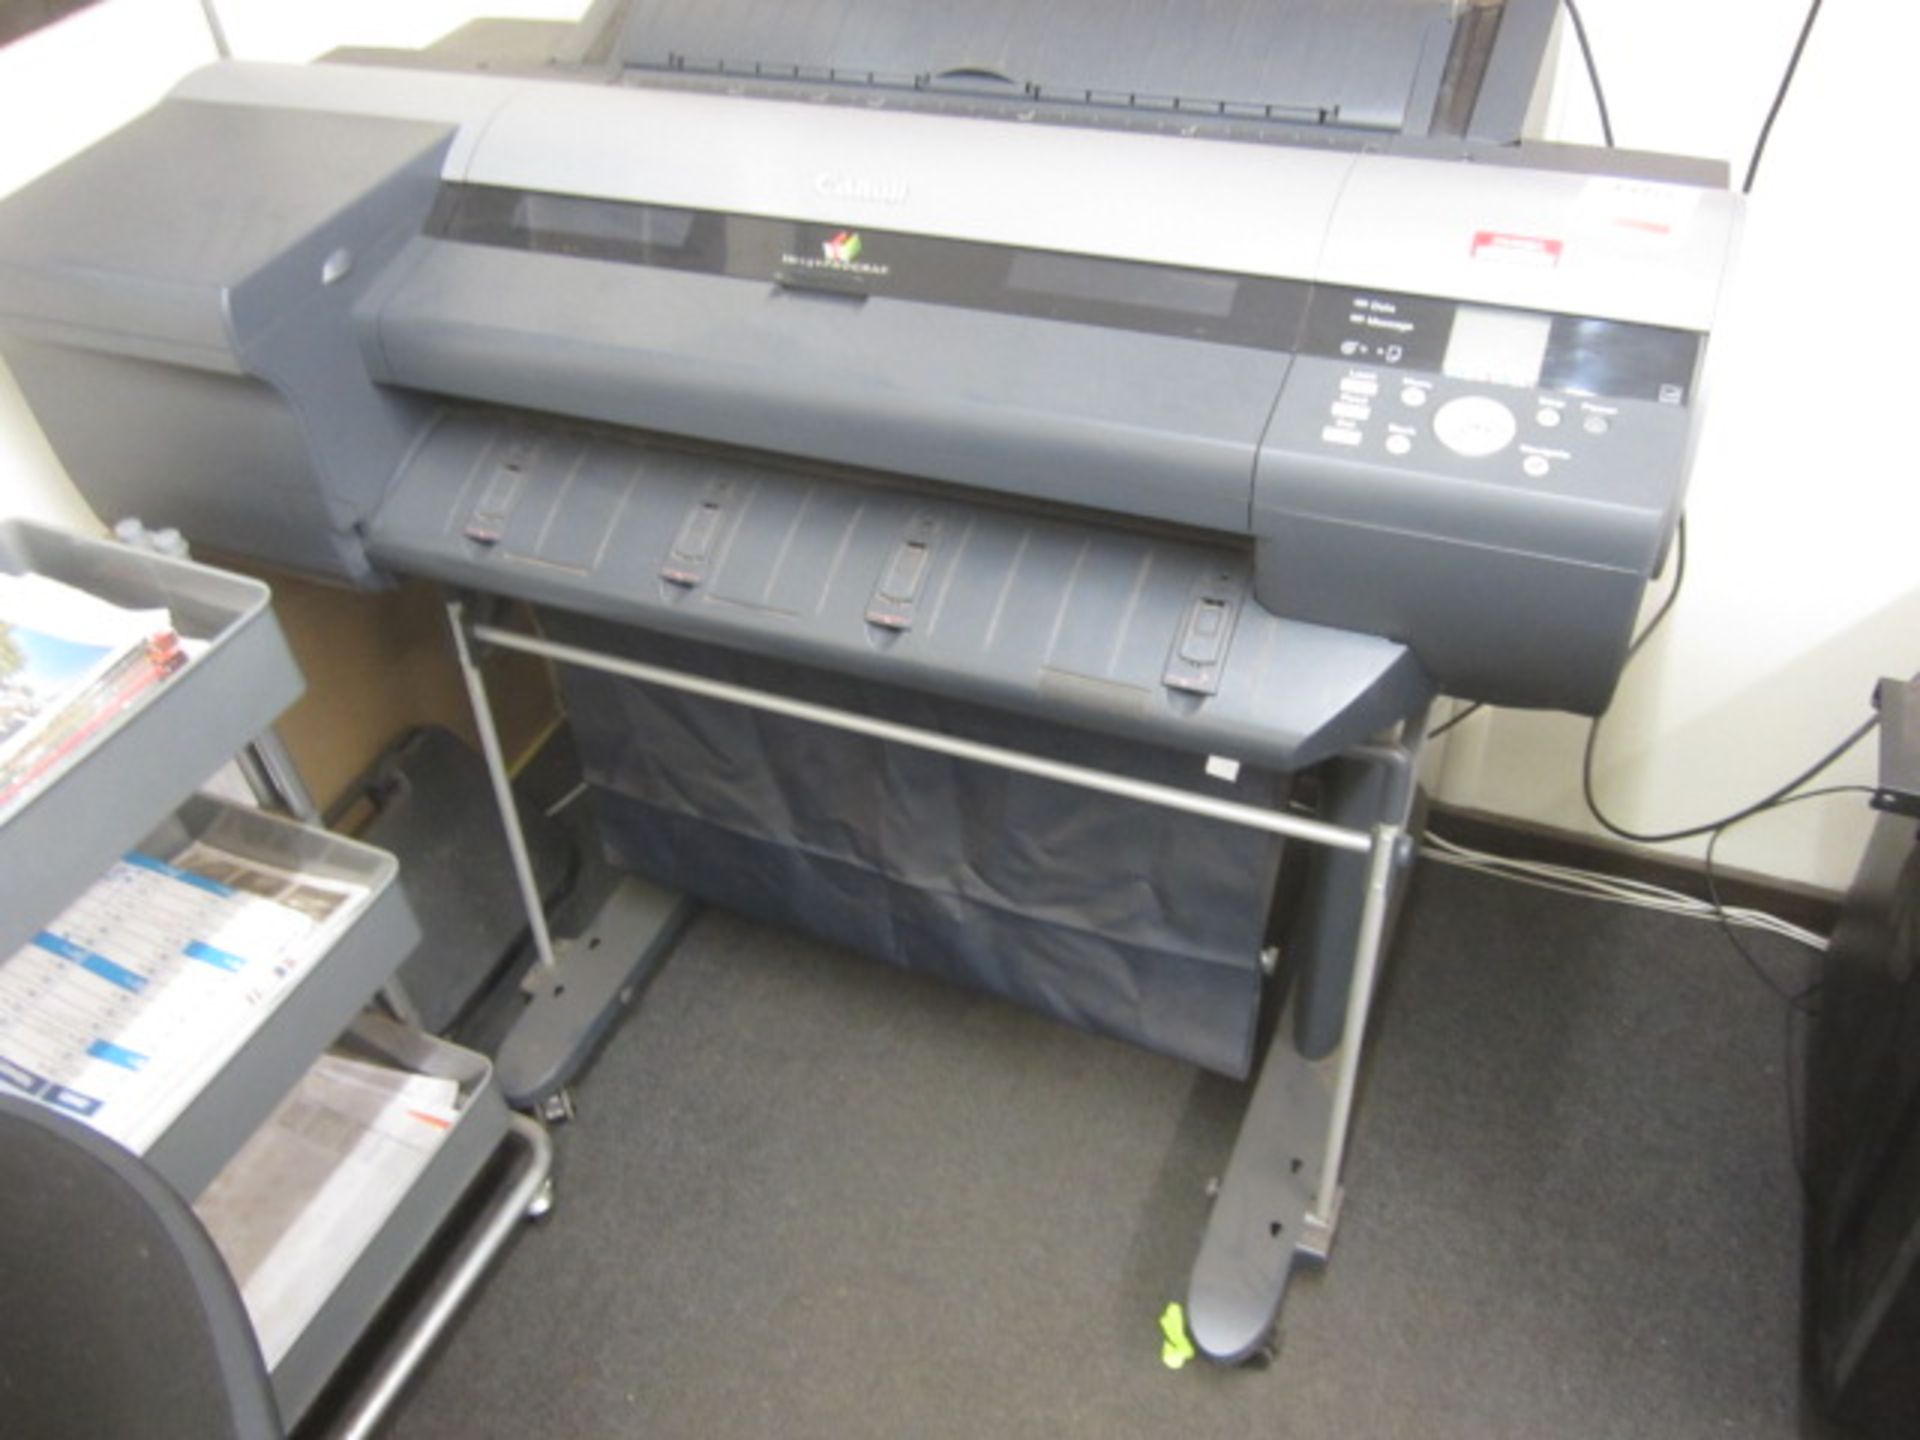 Canon Imageprograf IPF6400 printer